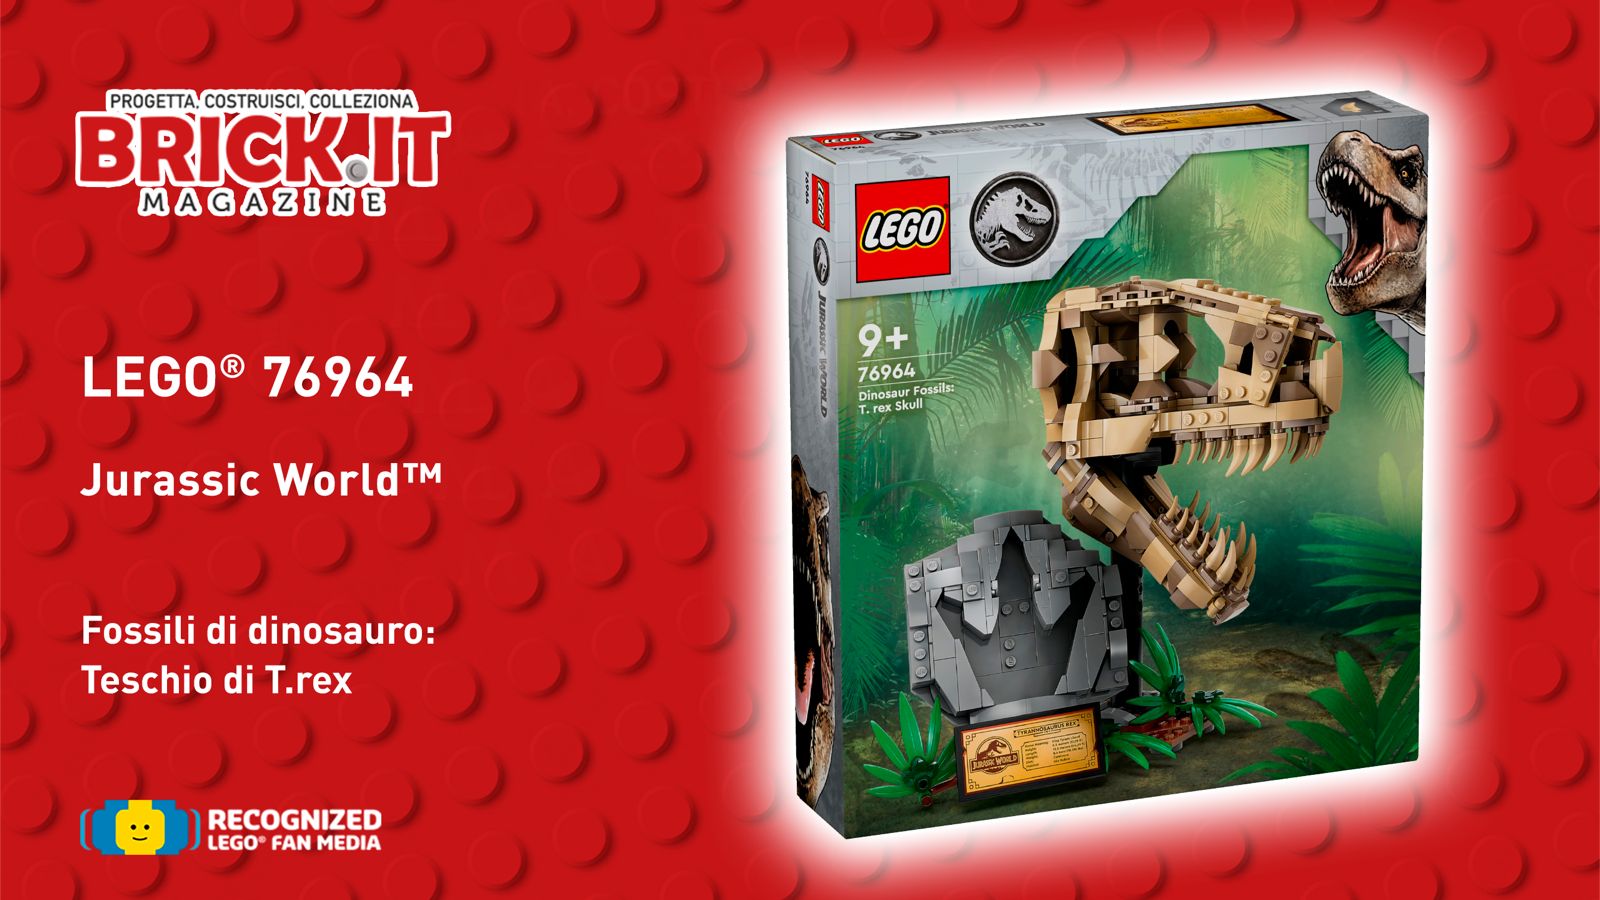 LEGO® 76964 -Jurassic World - Dinosaur Fossils: T-Rex Skull - Recensione -  Brick.it Magazine